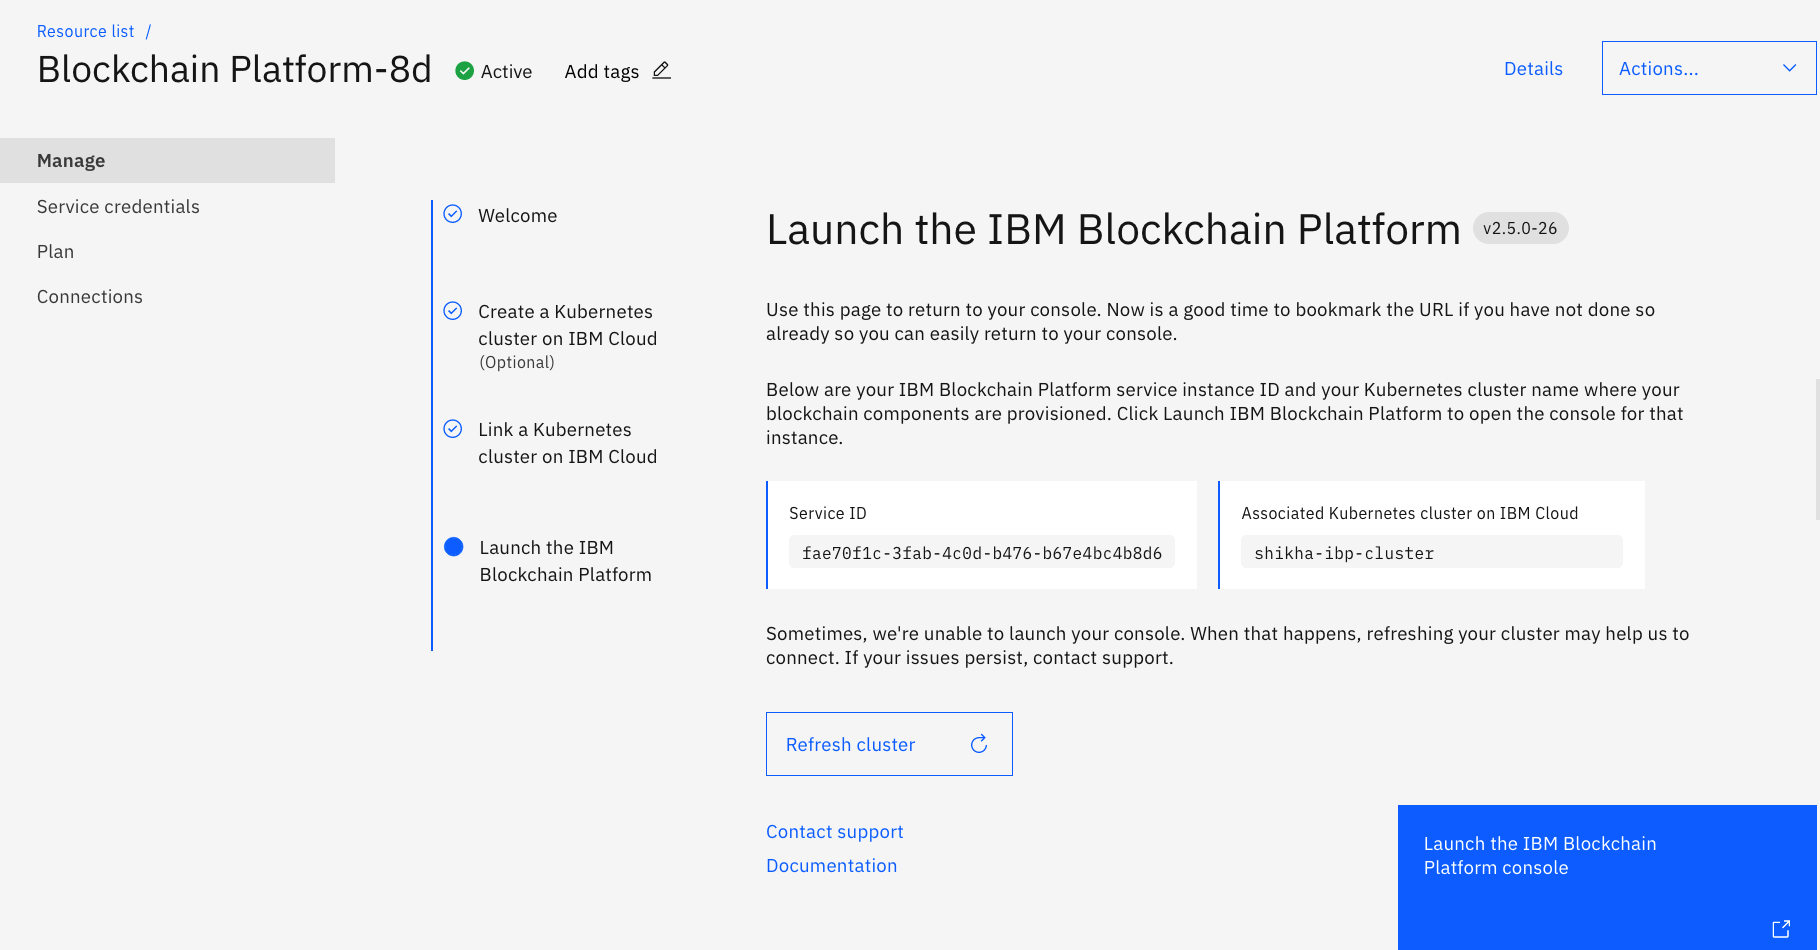 Launching the IBM Blockchain Platform